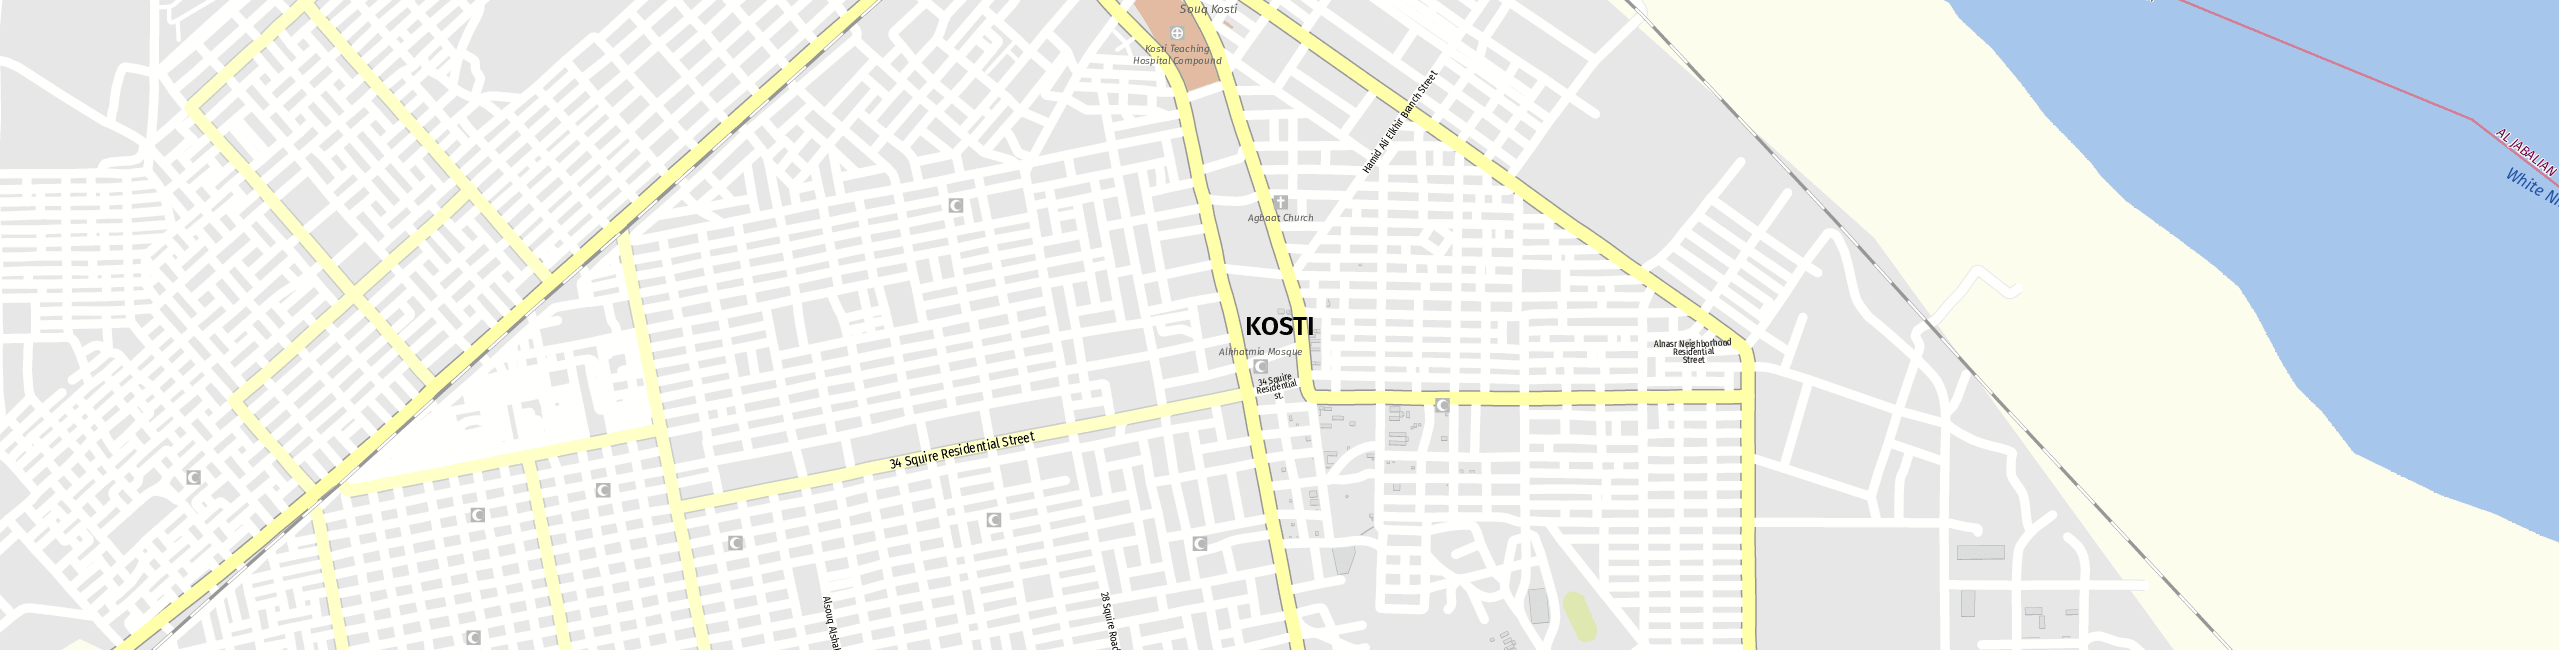 Stadtplan Kosti zum Downloaden.